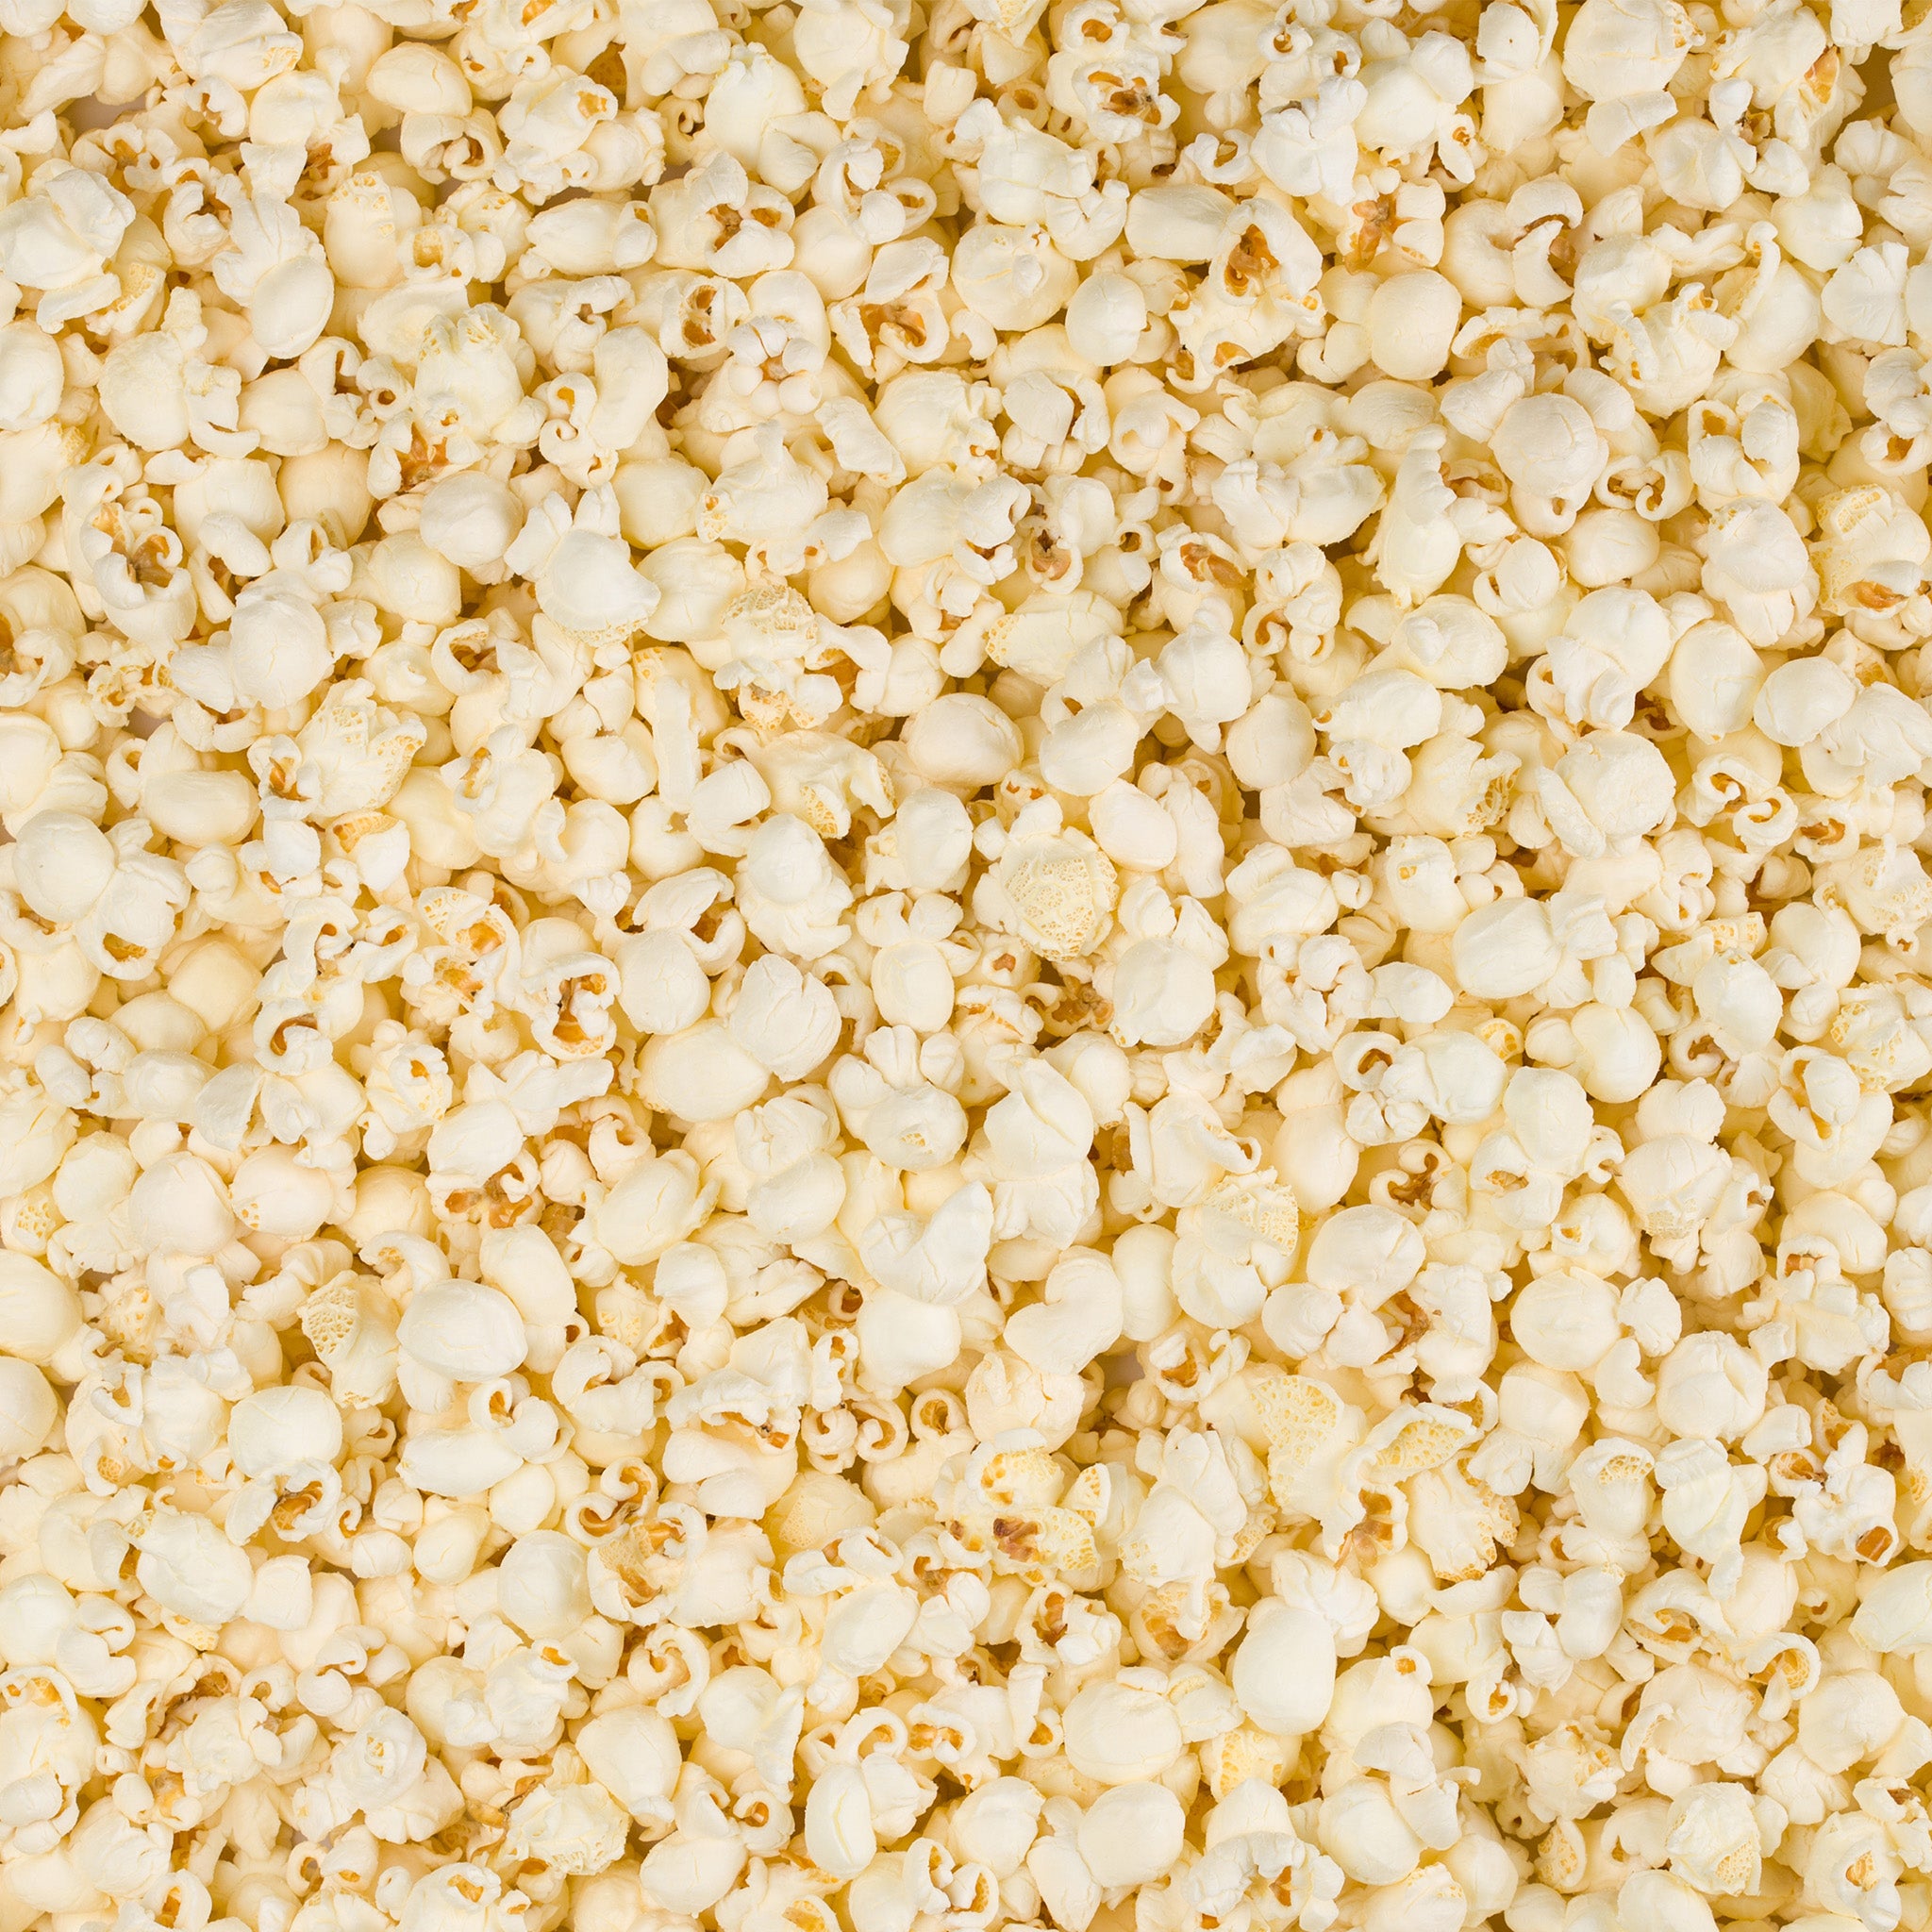 46oz Fresh Popcorn Boxes (Pack of 500)